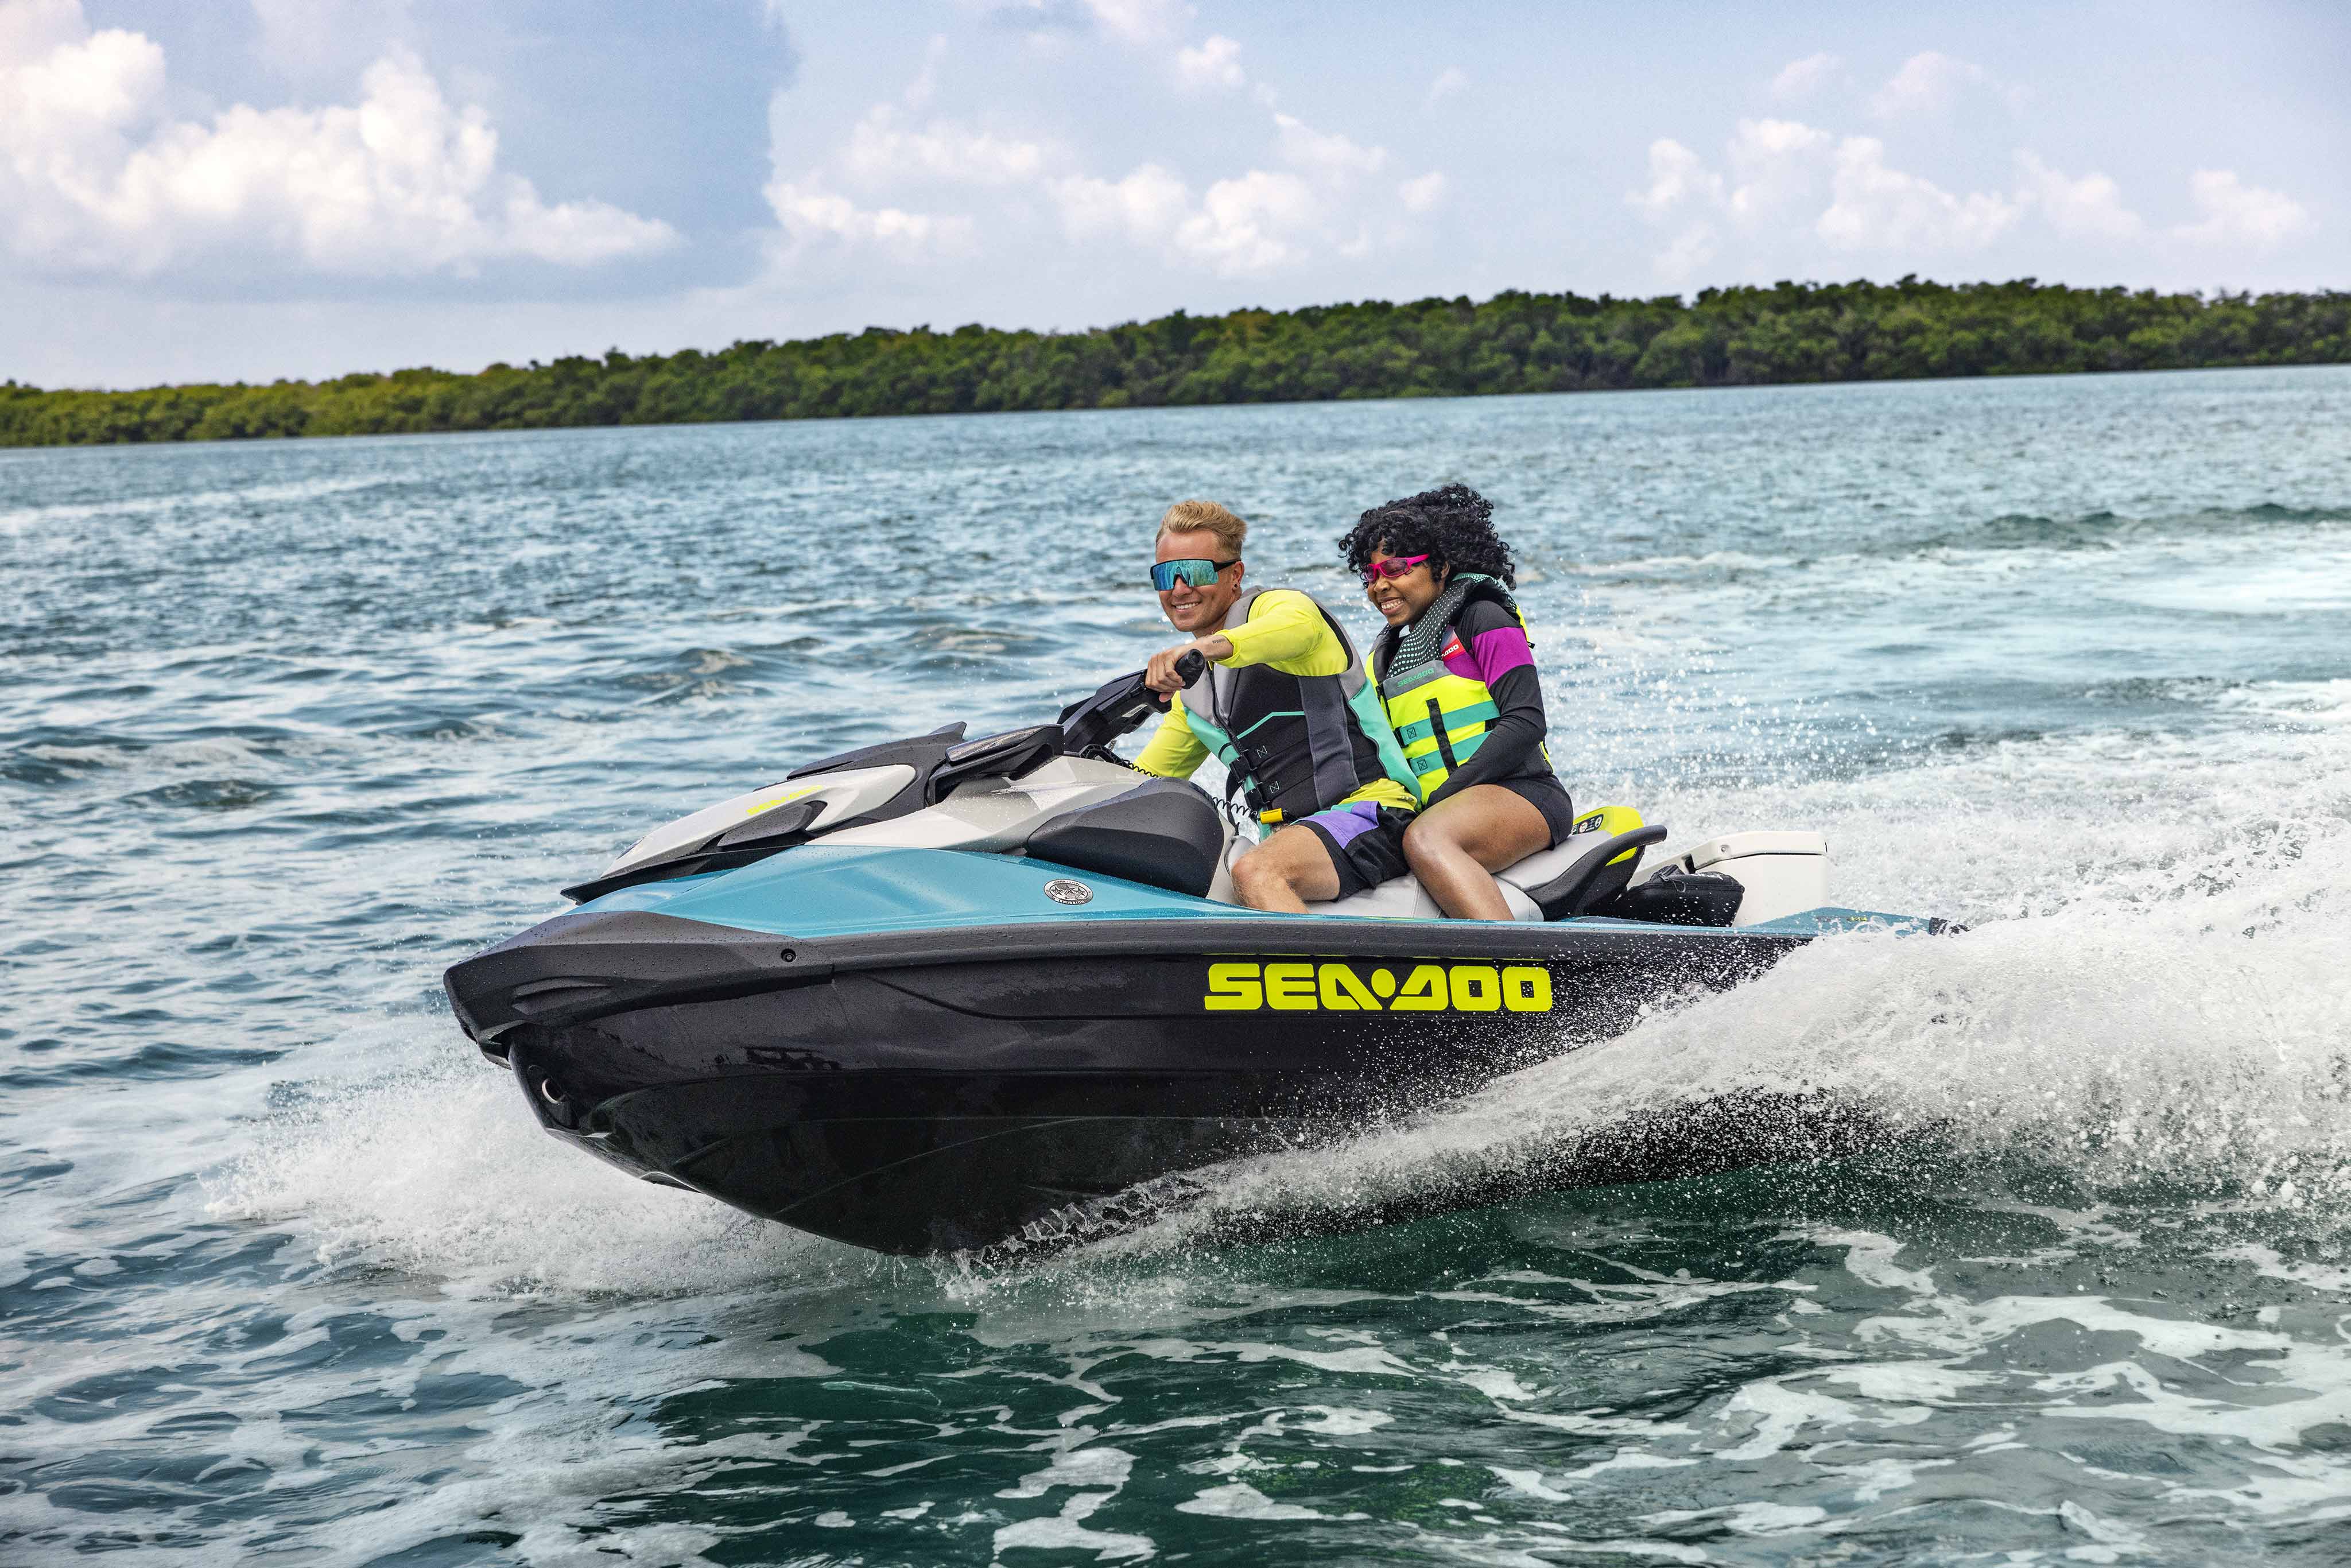 Couple riding a Sea-Doo GTI personal watercraft